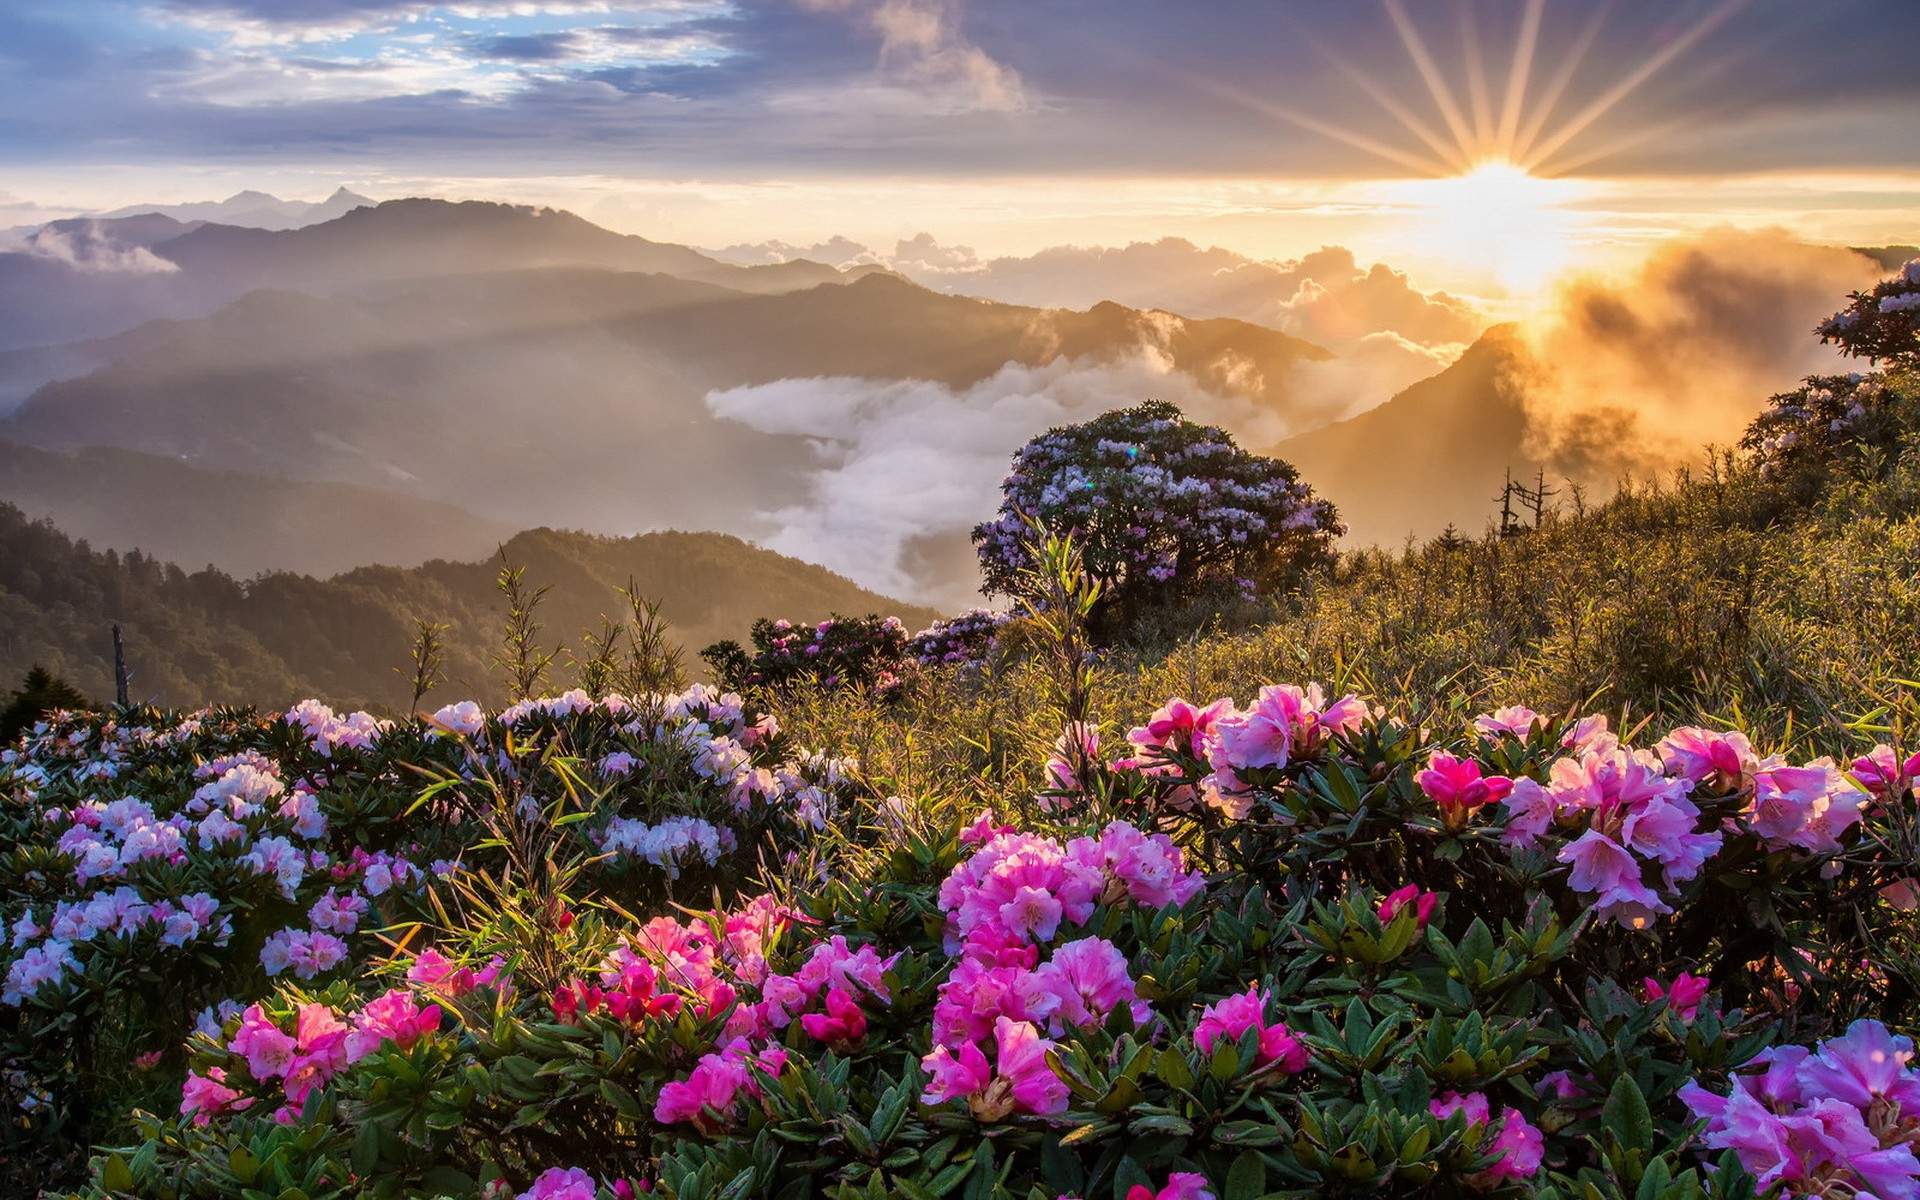 Mountain Sunrise Beautiful Landscape For Desktop In